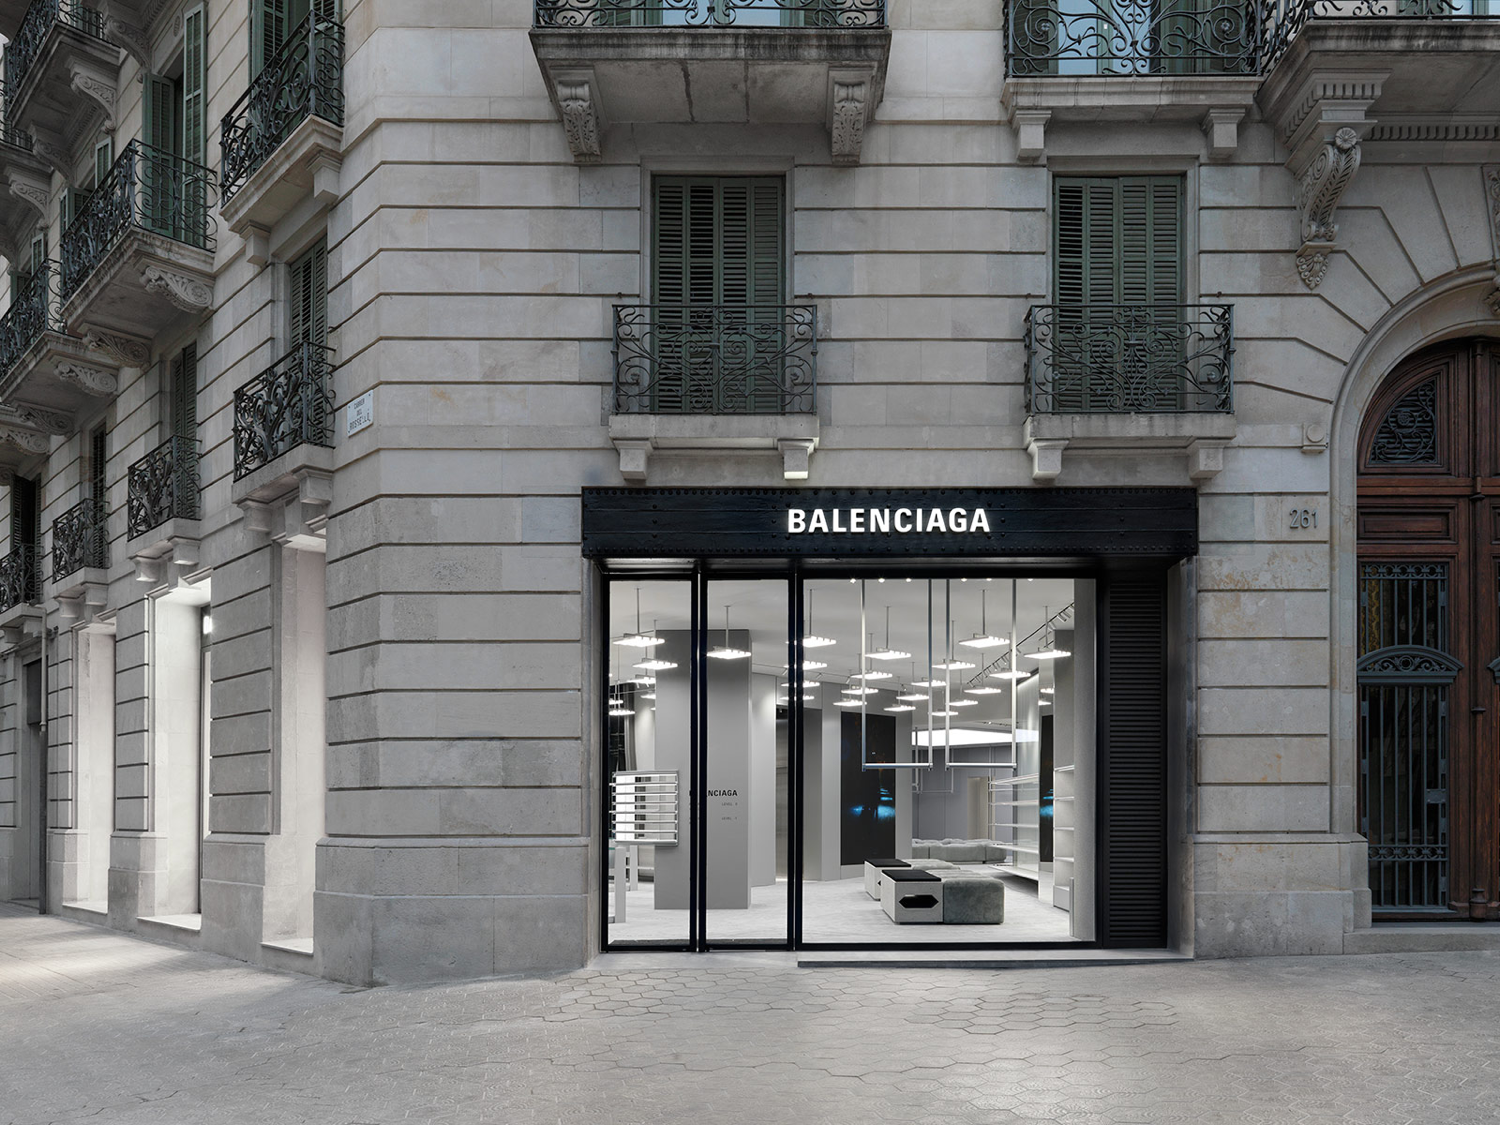 Luxury Fashion Retailer Saint Laurent Opening Flagship Store in